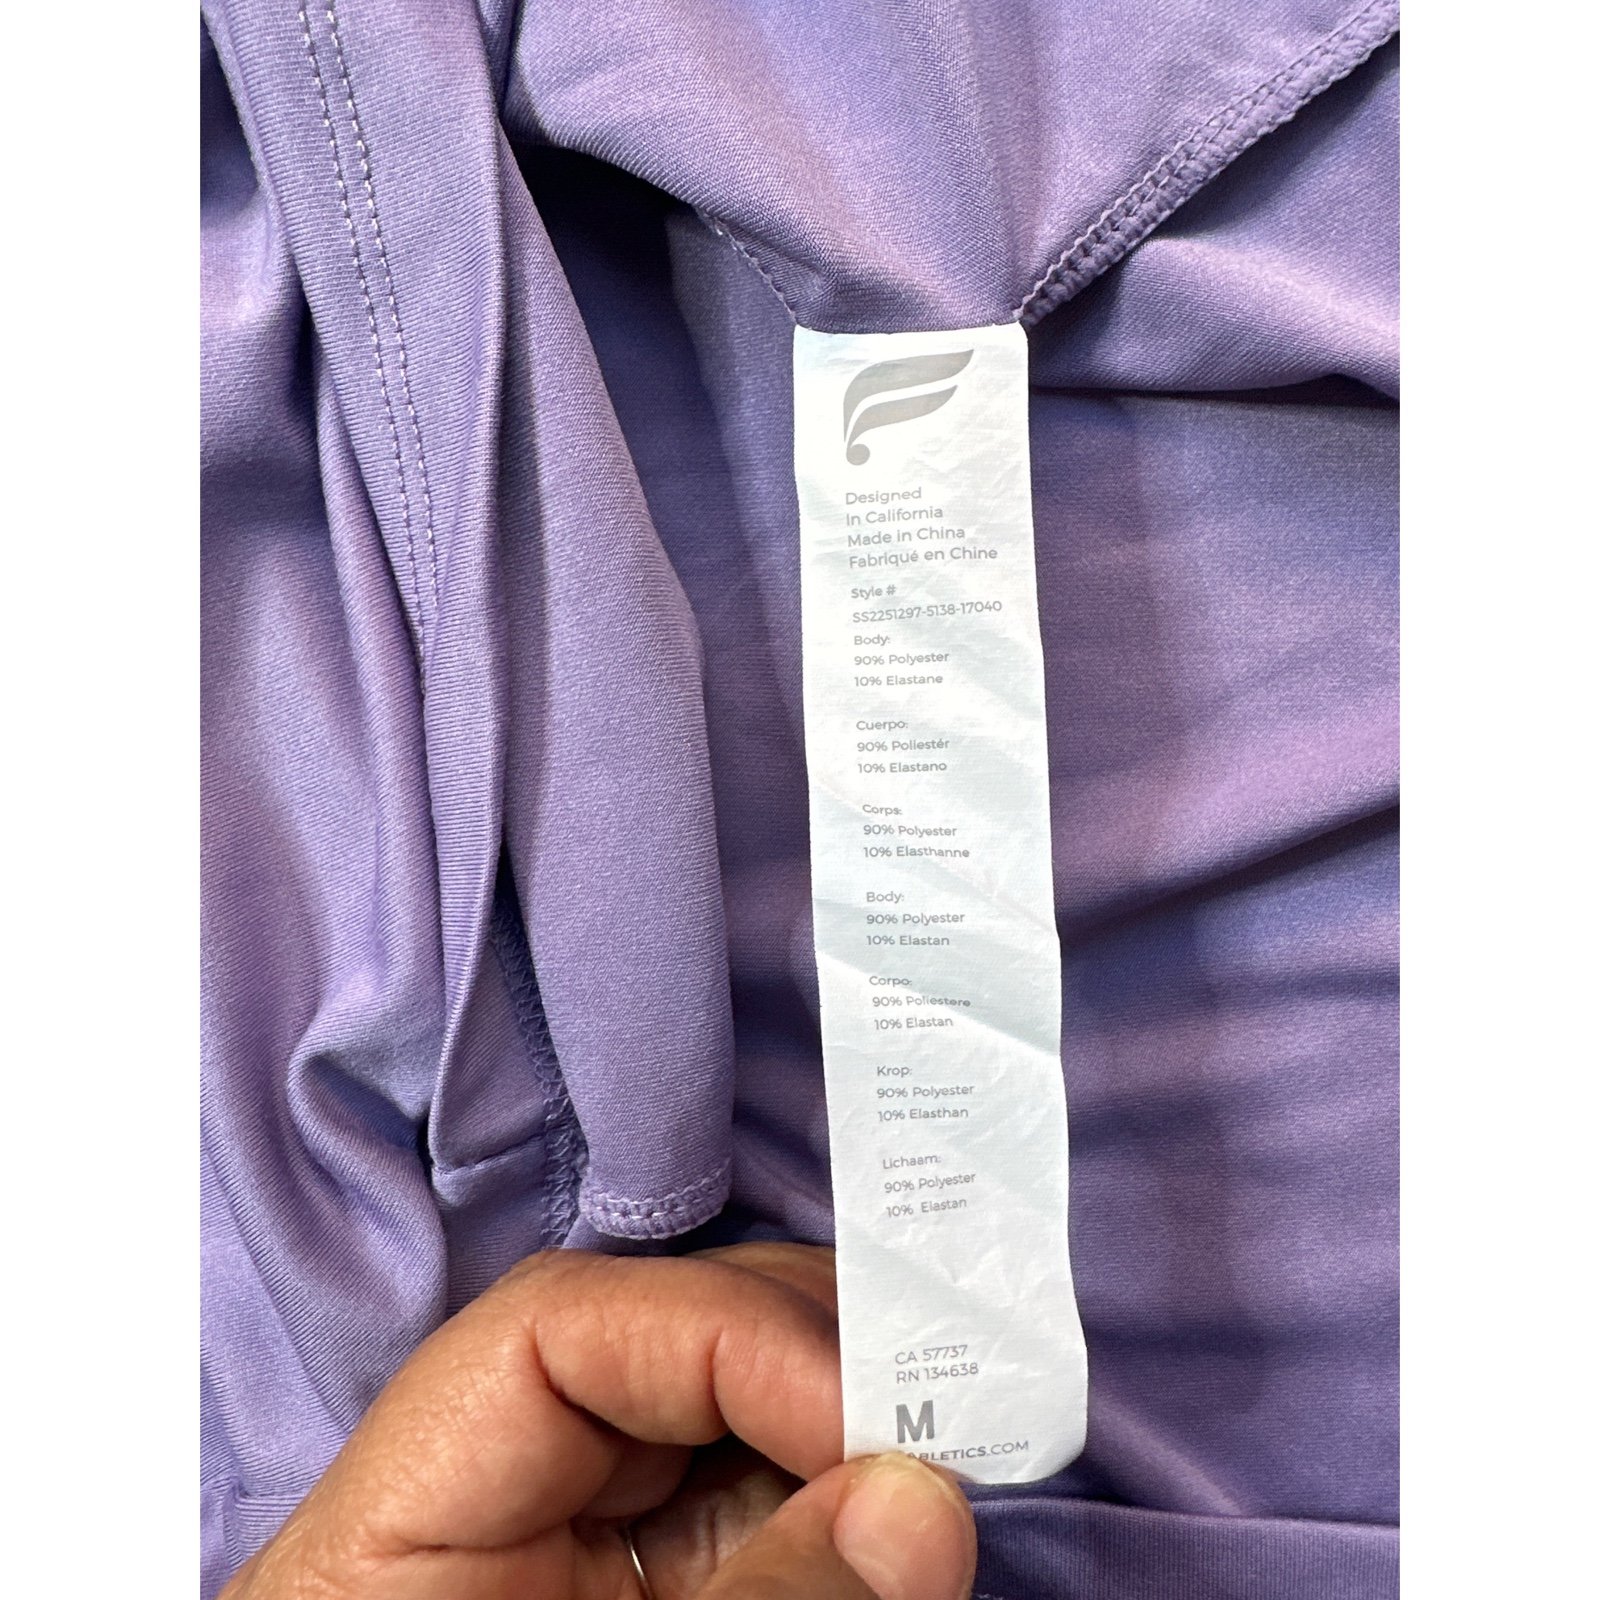 reasonable price Fabletics Sweat Resistant Short Sleeve T shirt kvgJJZSo9 hot sale